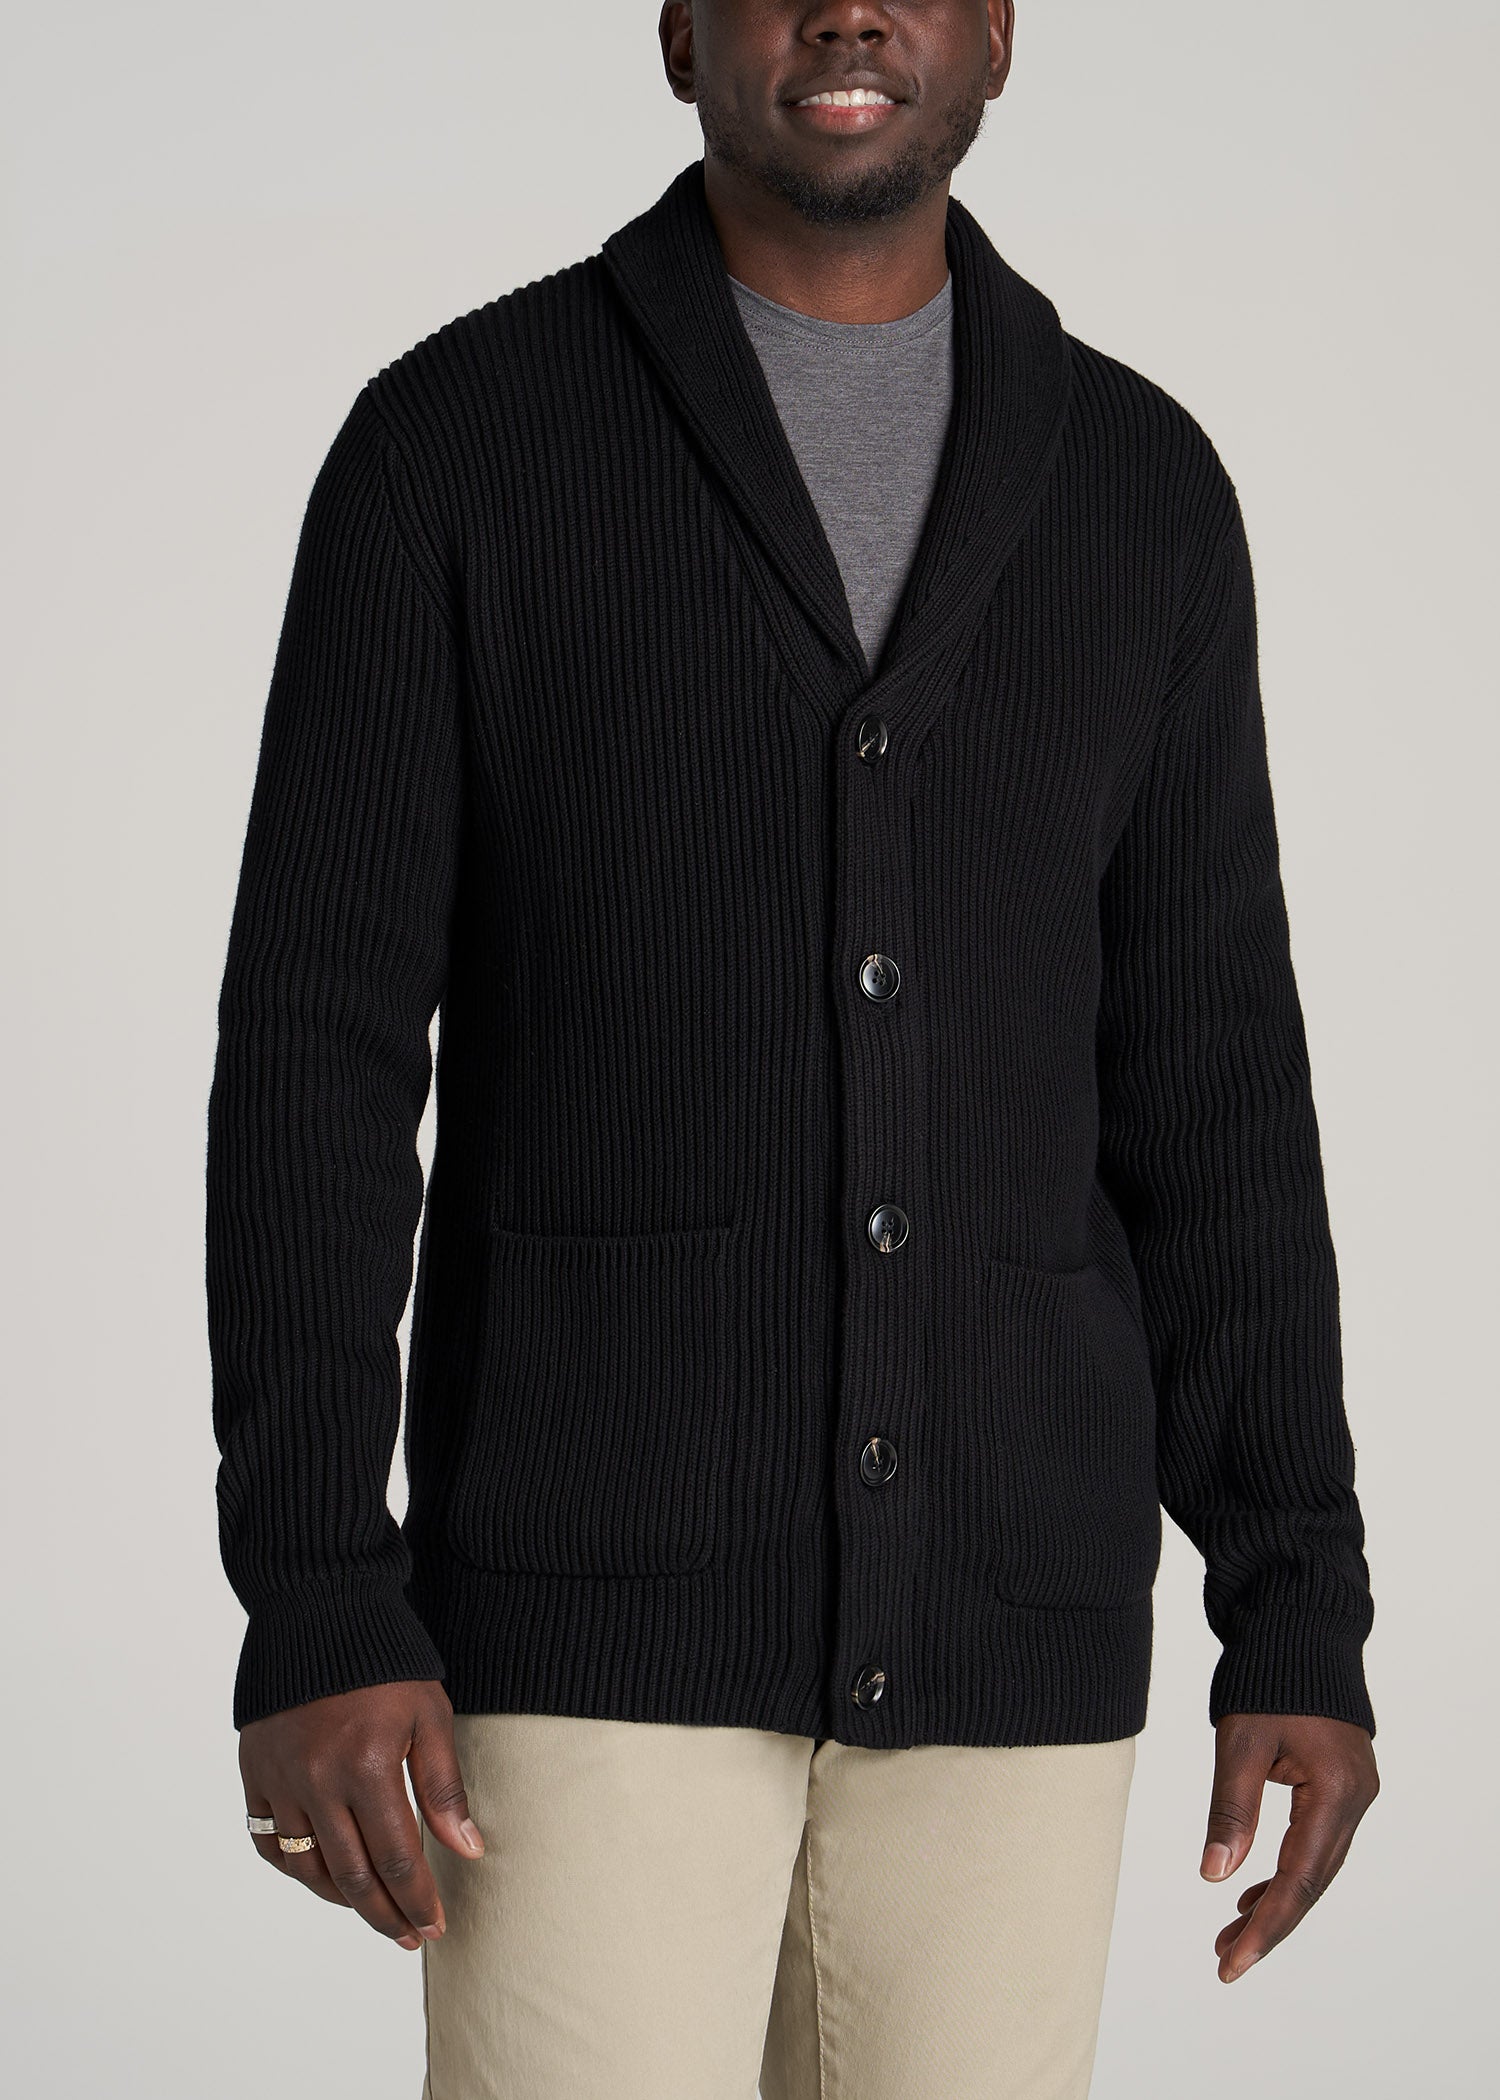 Accor onsdag Høre fra Cardigan Sweater Men: Black Heavy Knit Cardigan | American Tall